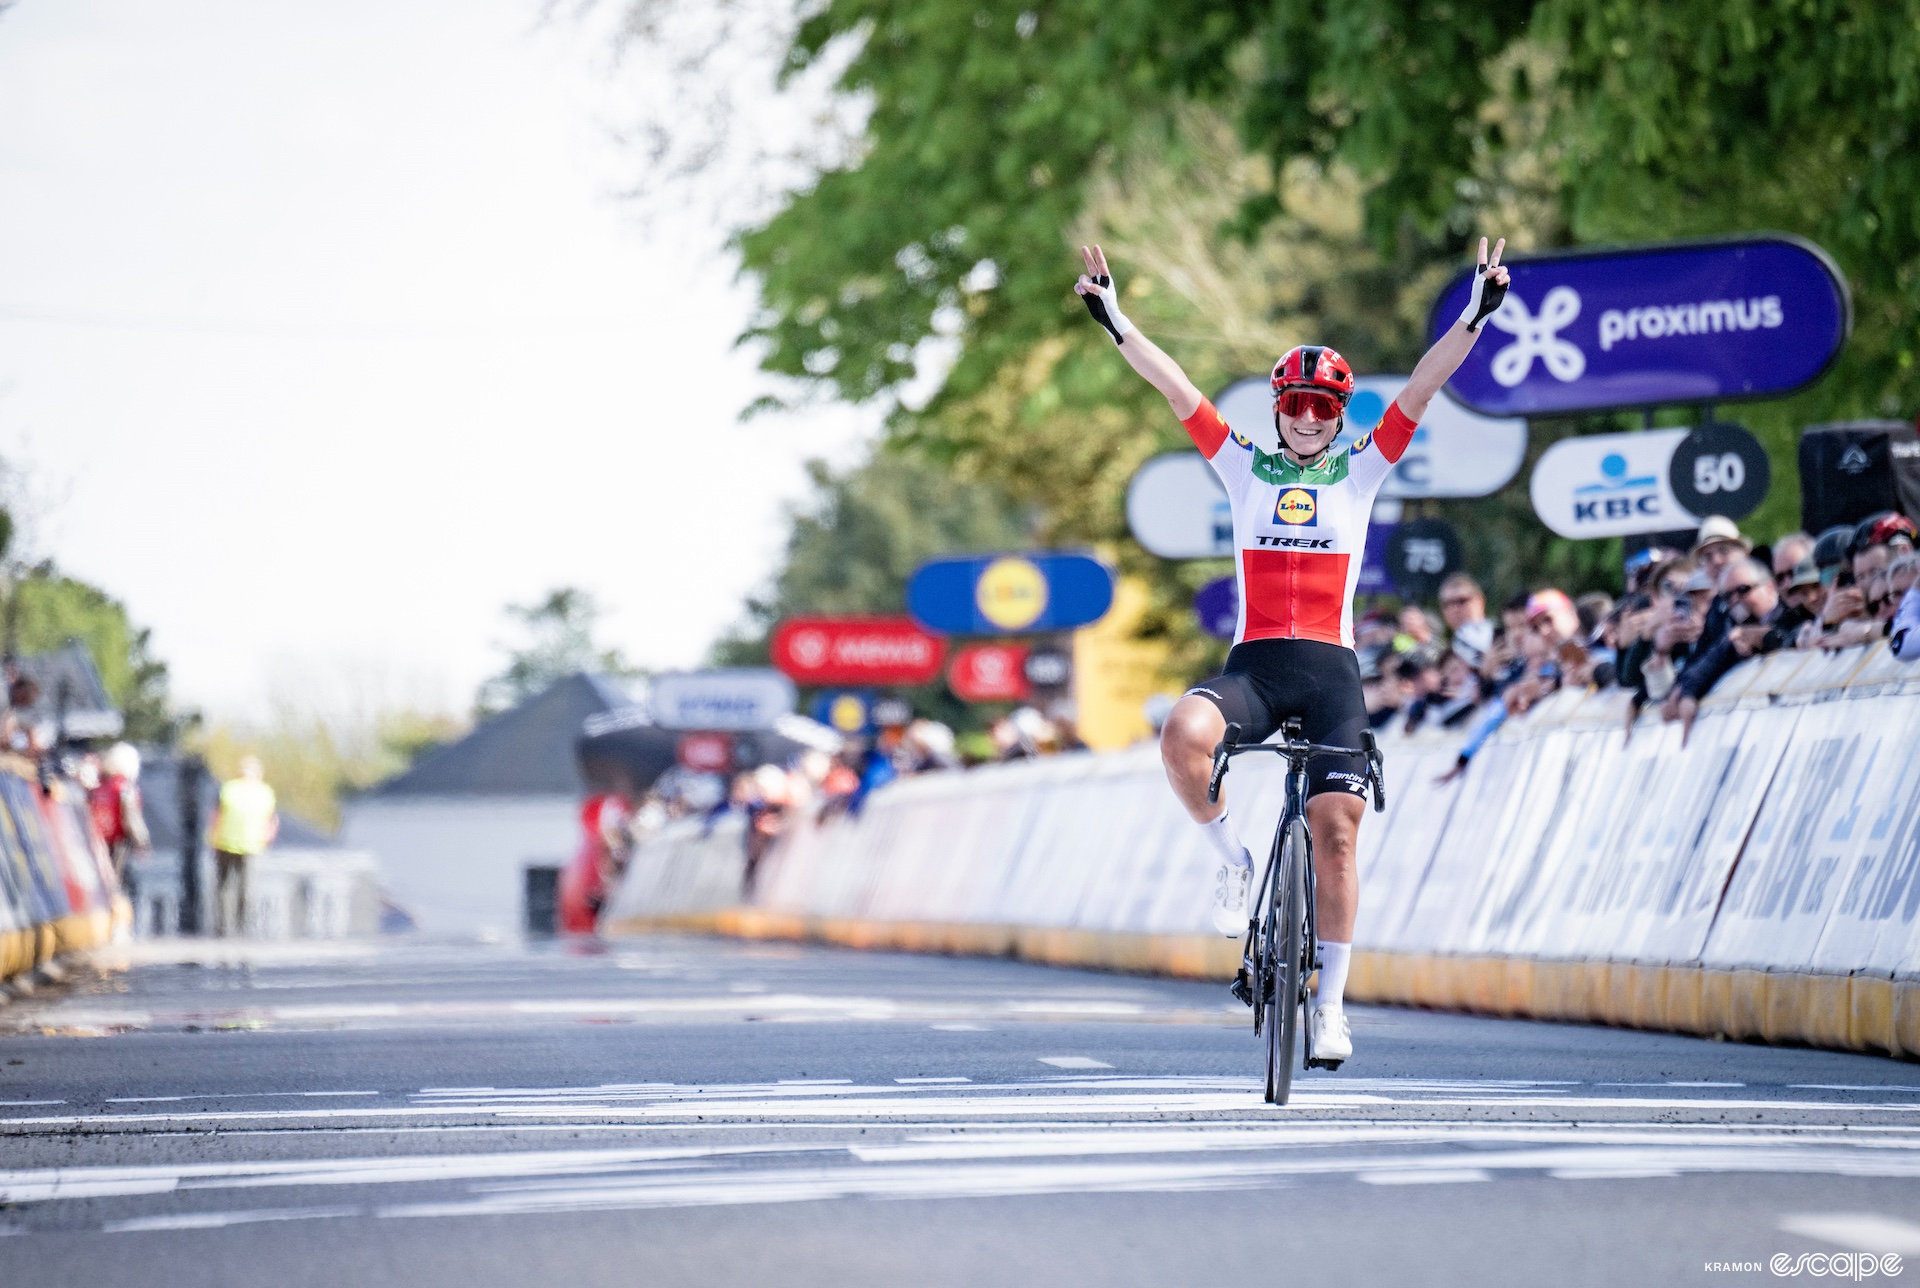 Elisa Longo Borghini raises her arms as she wins a cycling race.